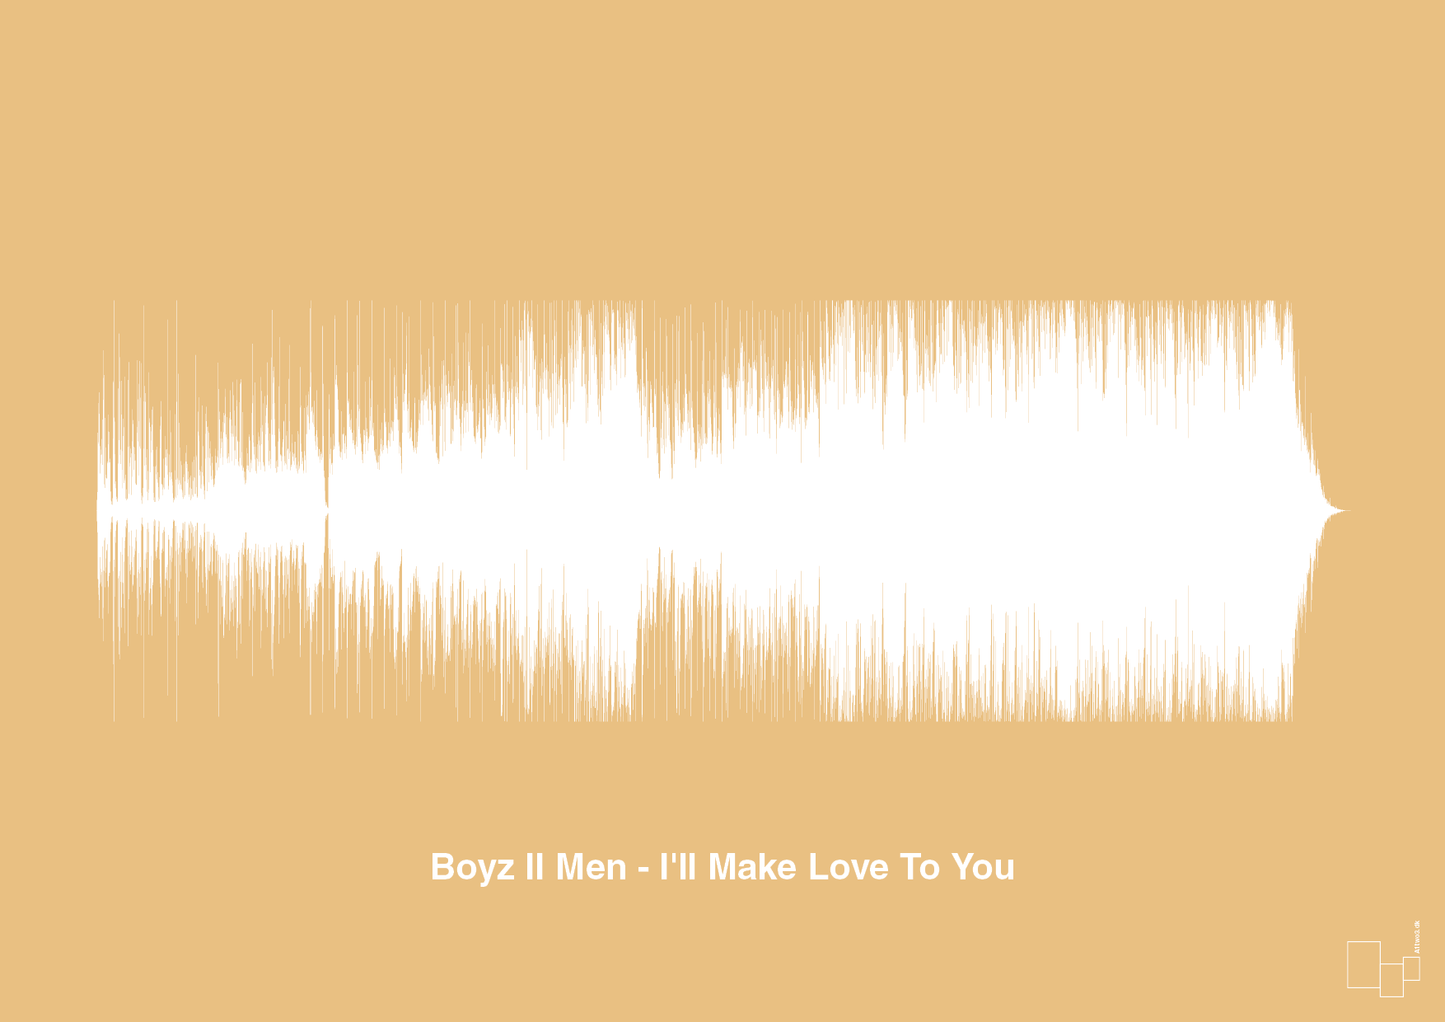 boyz II men - i'll make love to you - Plakat med Musik i Charismatic